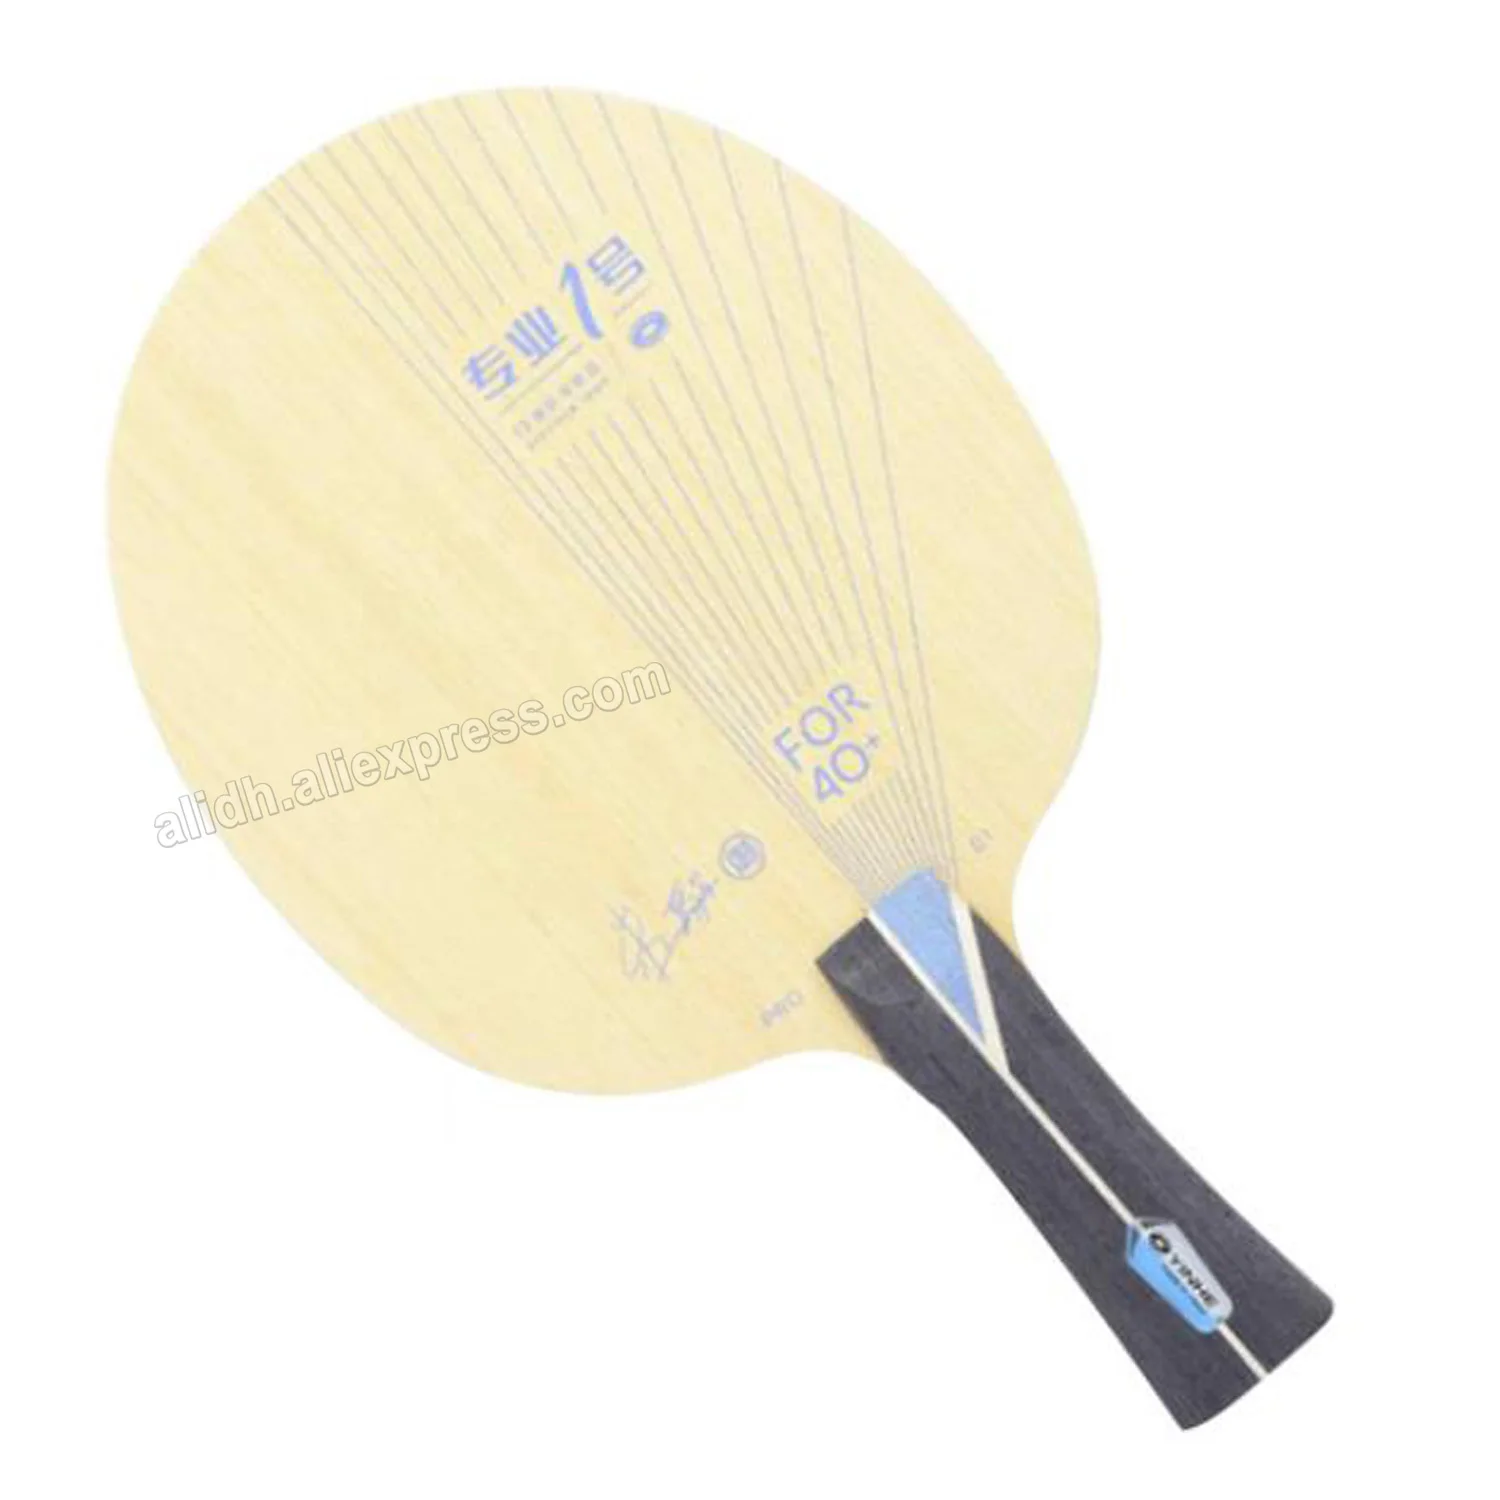 YINHE PRO-01 Carbon Fiber ZHU YI Professional Table Tennis Blade Original YINHE PRO 01 Galaxy Racket Ping Pong Bat Paddle